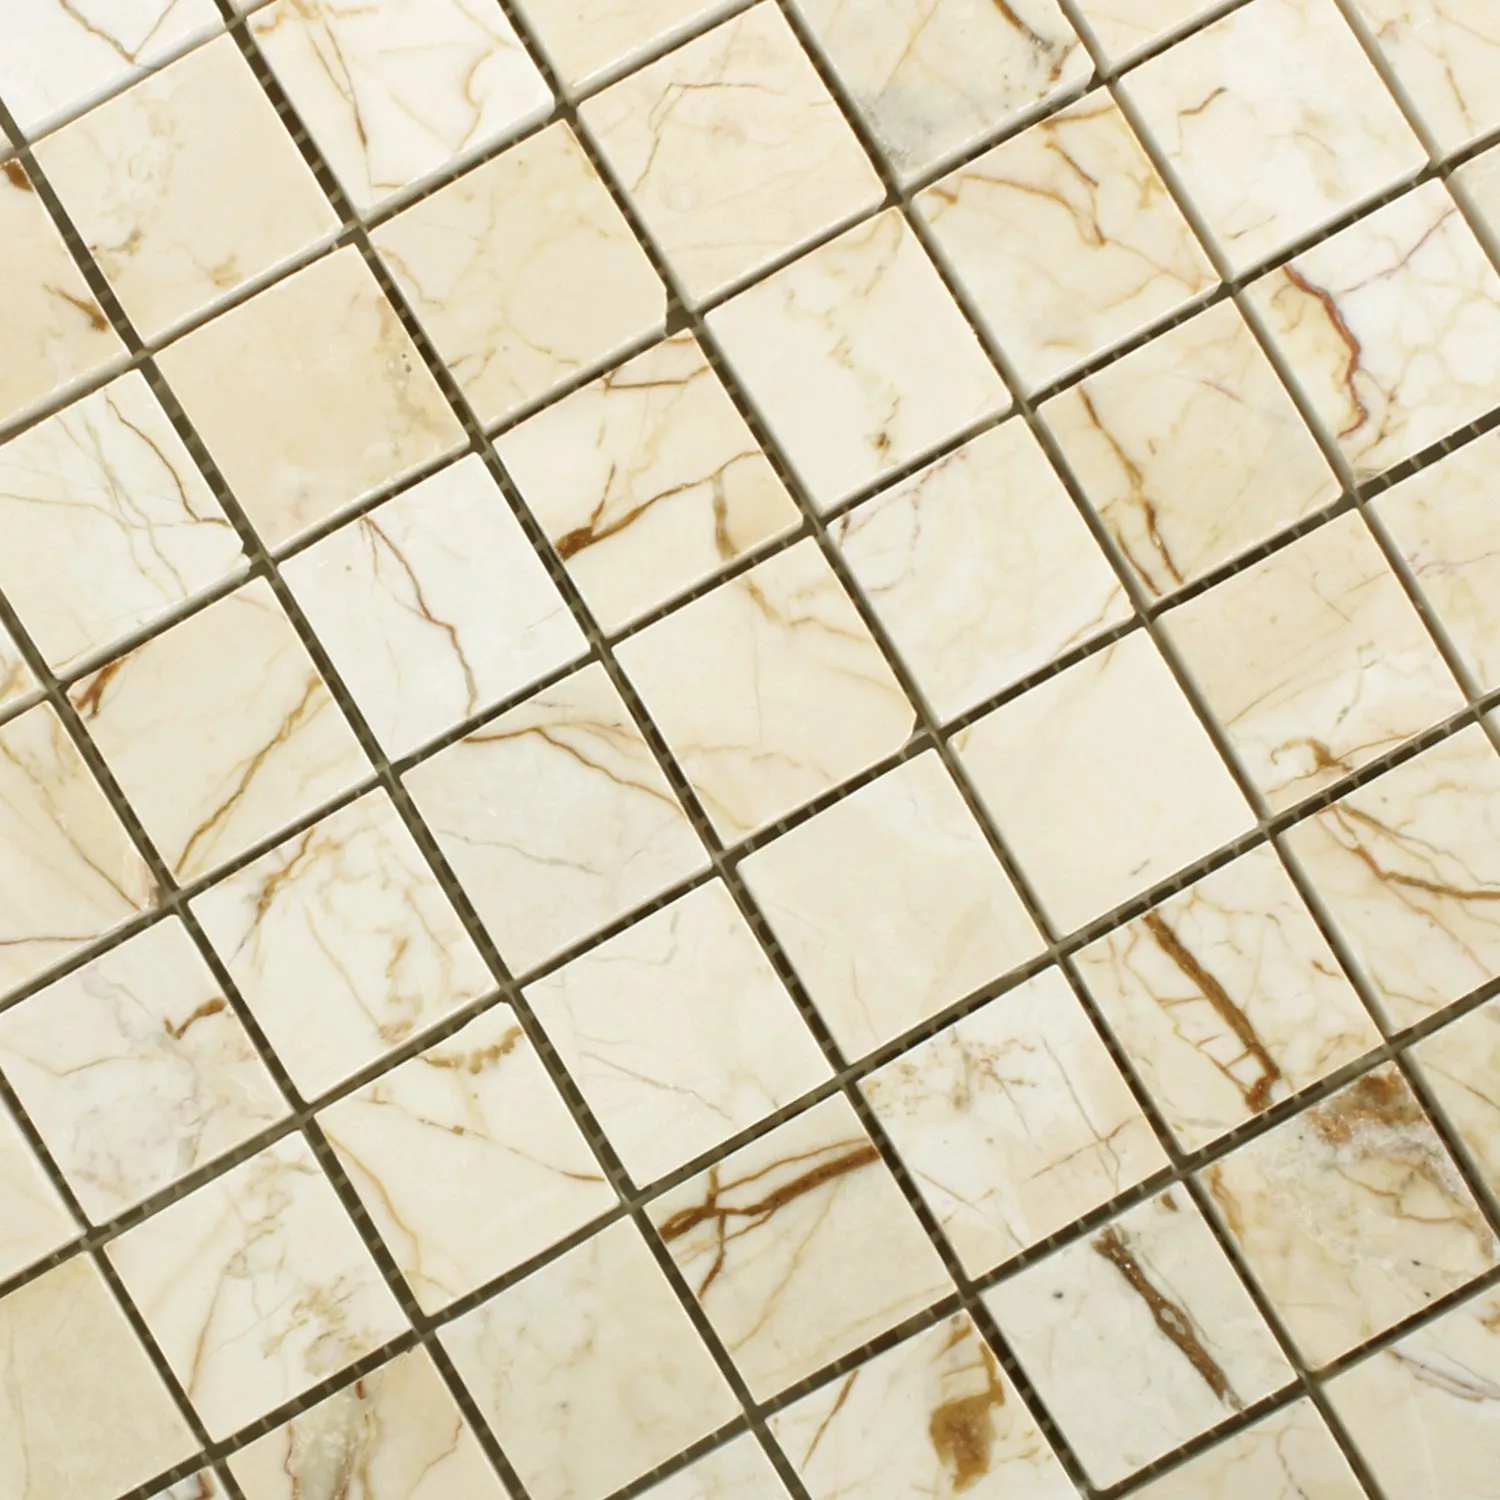 Sample Mosaic Tiles Marble Golden Cream Polished